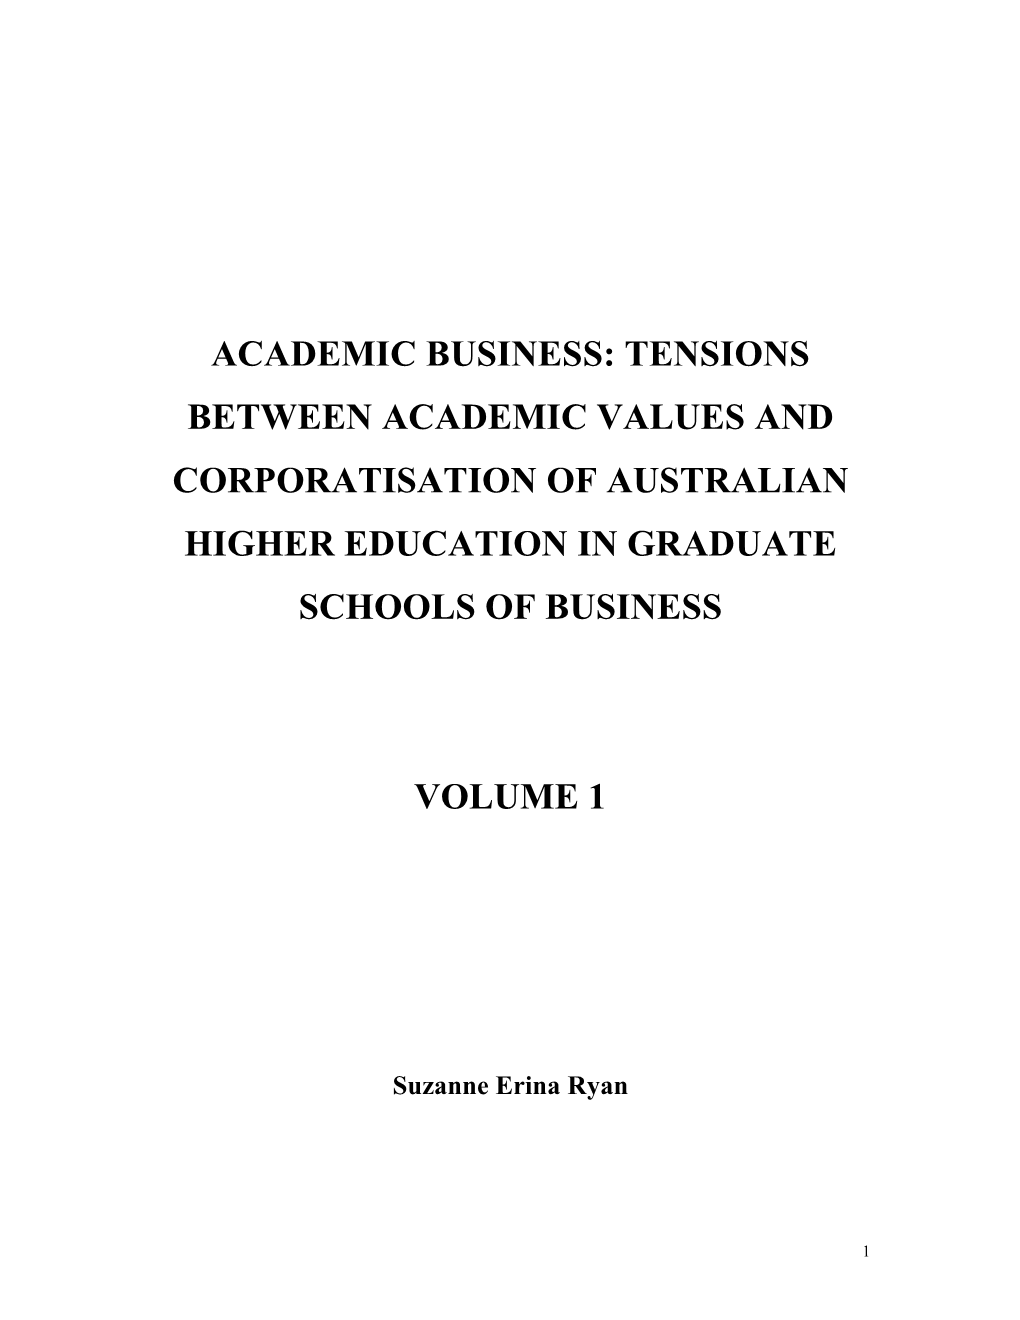 Tensions Between Academic Values and Corporatisation of Australian Higher Education in Graduate Schools of Business